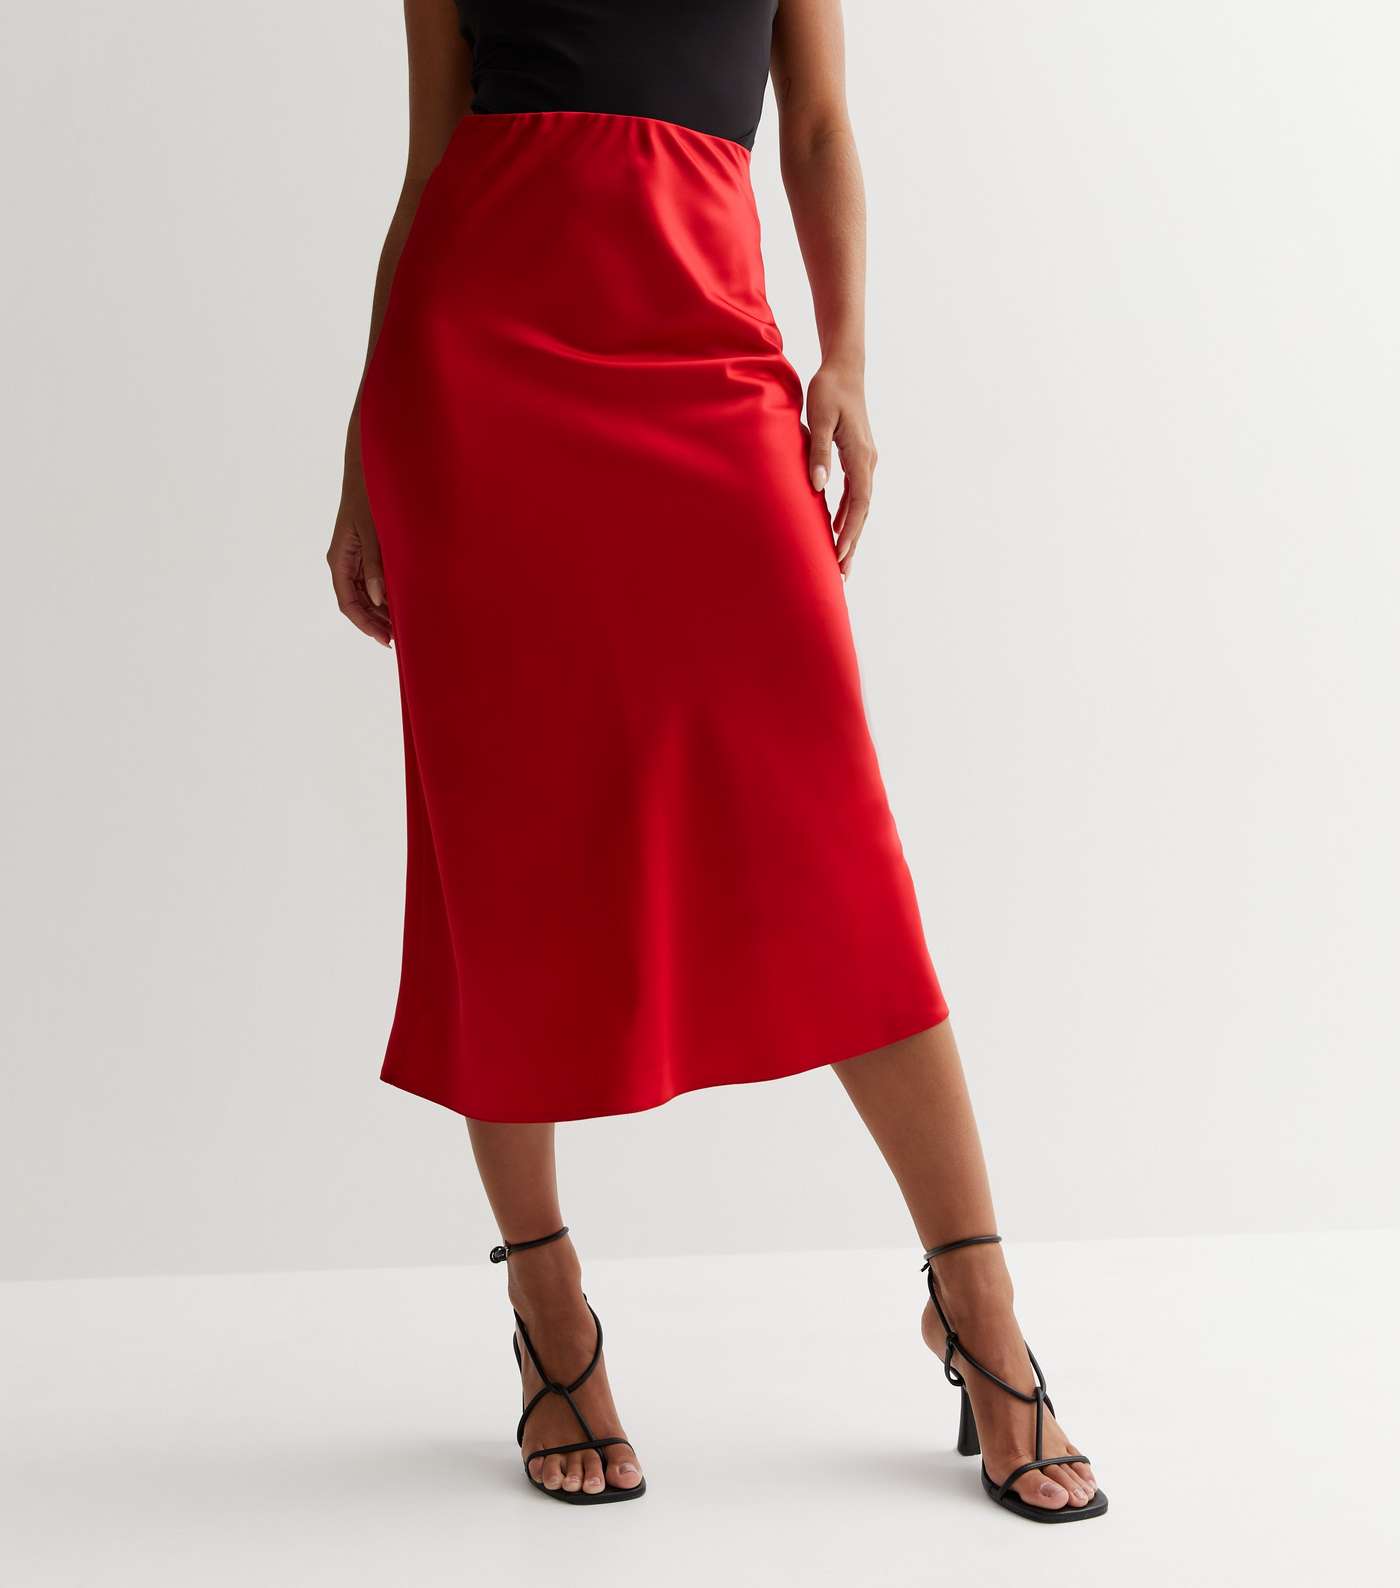 Red Satin Bias Cut Midaxi Skirt Image 2